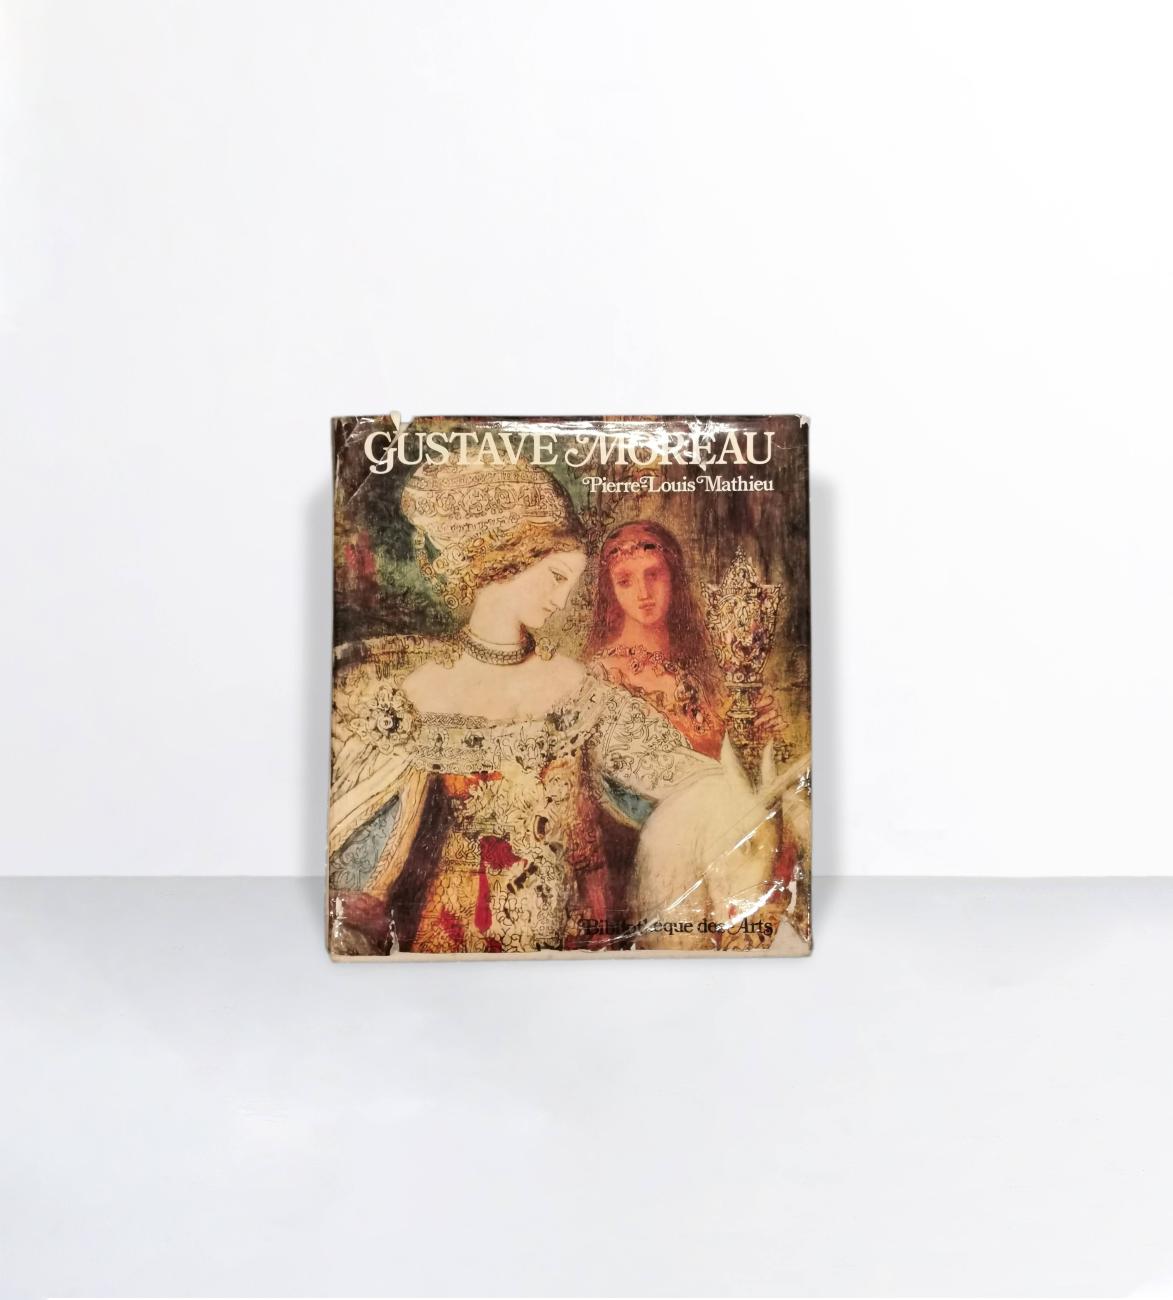 Gustave Moreau, sa vie, son Oeuvre